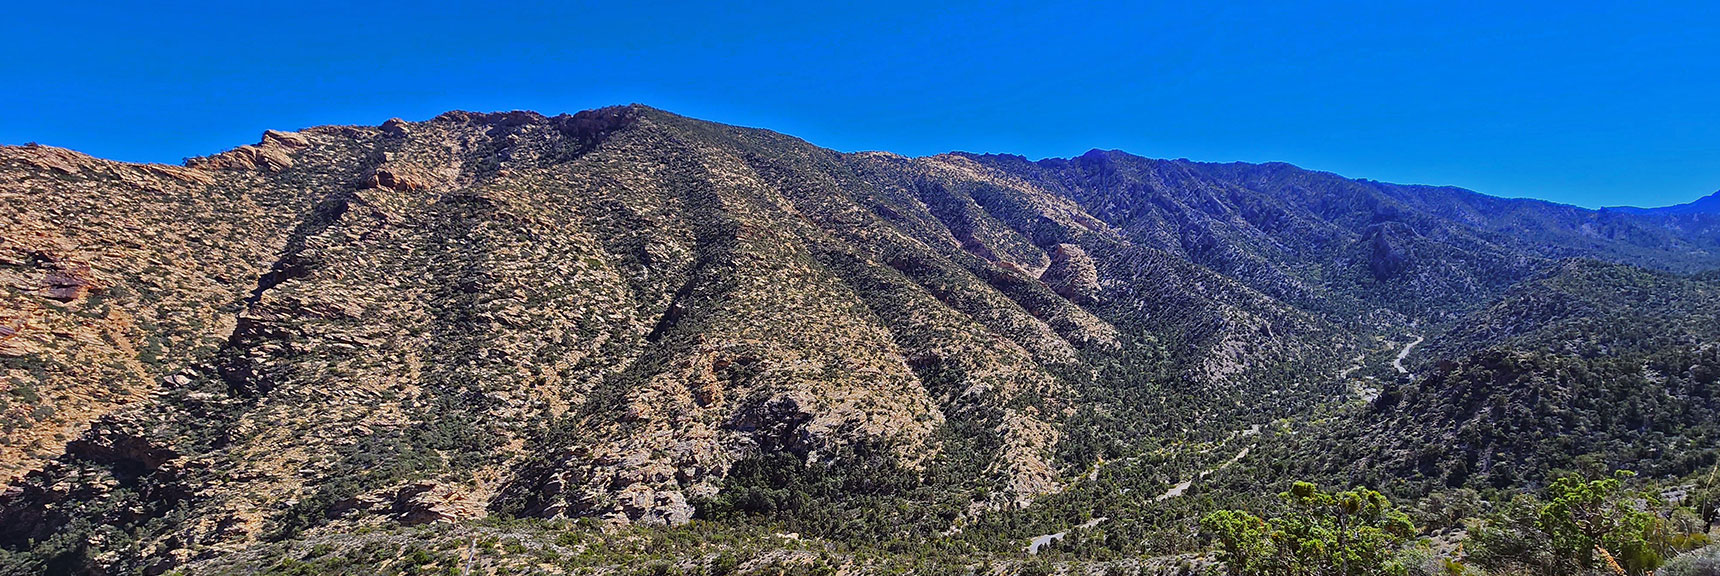 Rainbow Mts. Upper Crest Ridgeline Stretching South | Switchback Spring Ridge | Red Rock Canyon, Nevada